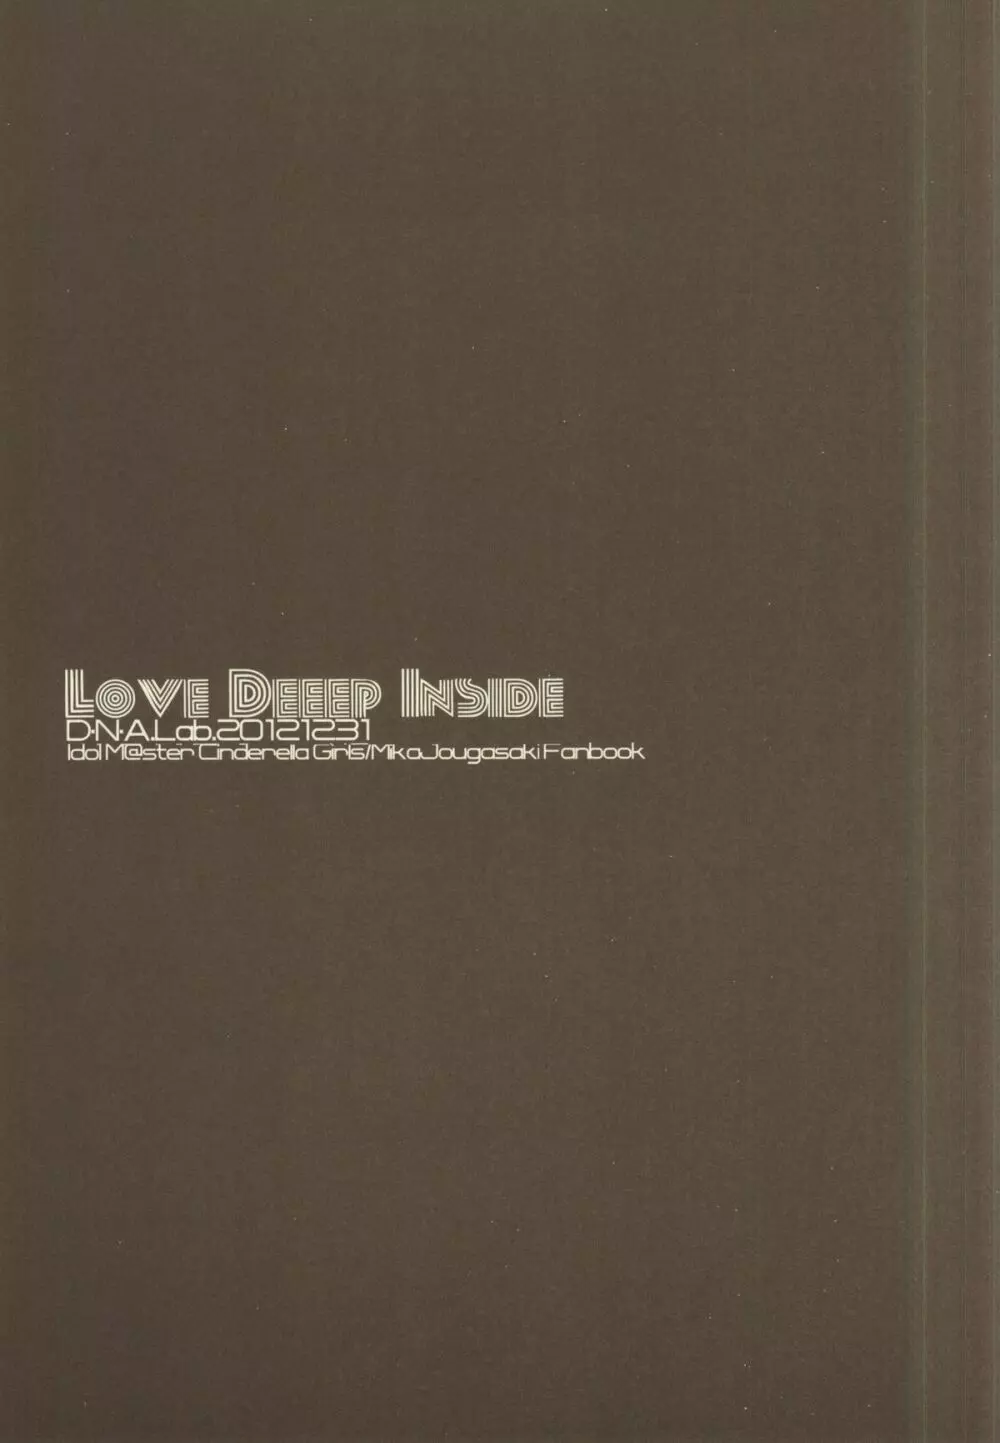 LOVE DEEEP INSIDE 20ページ